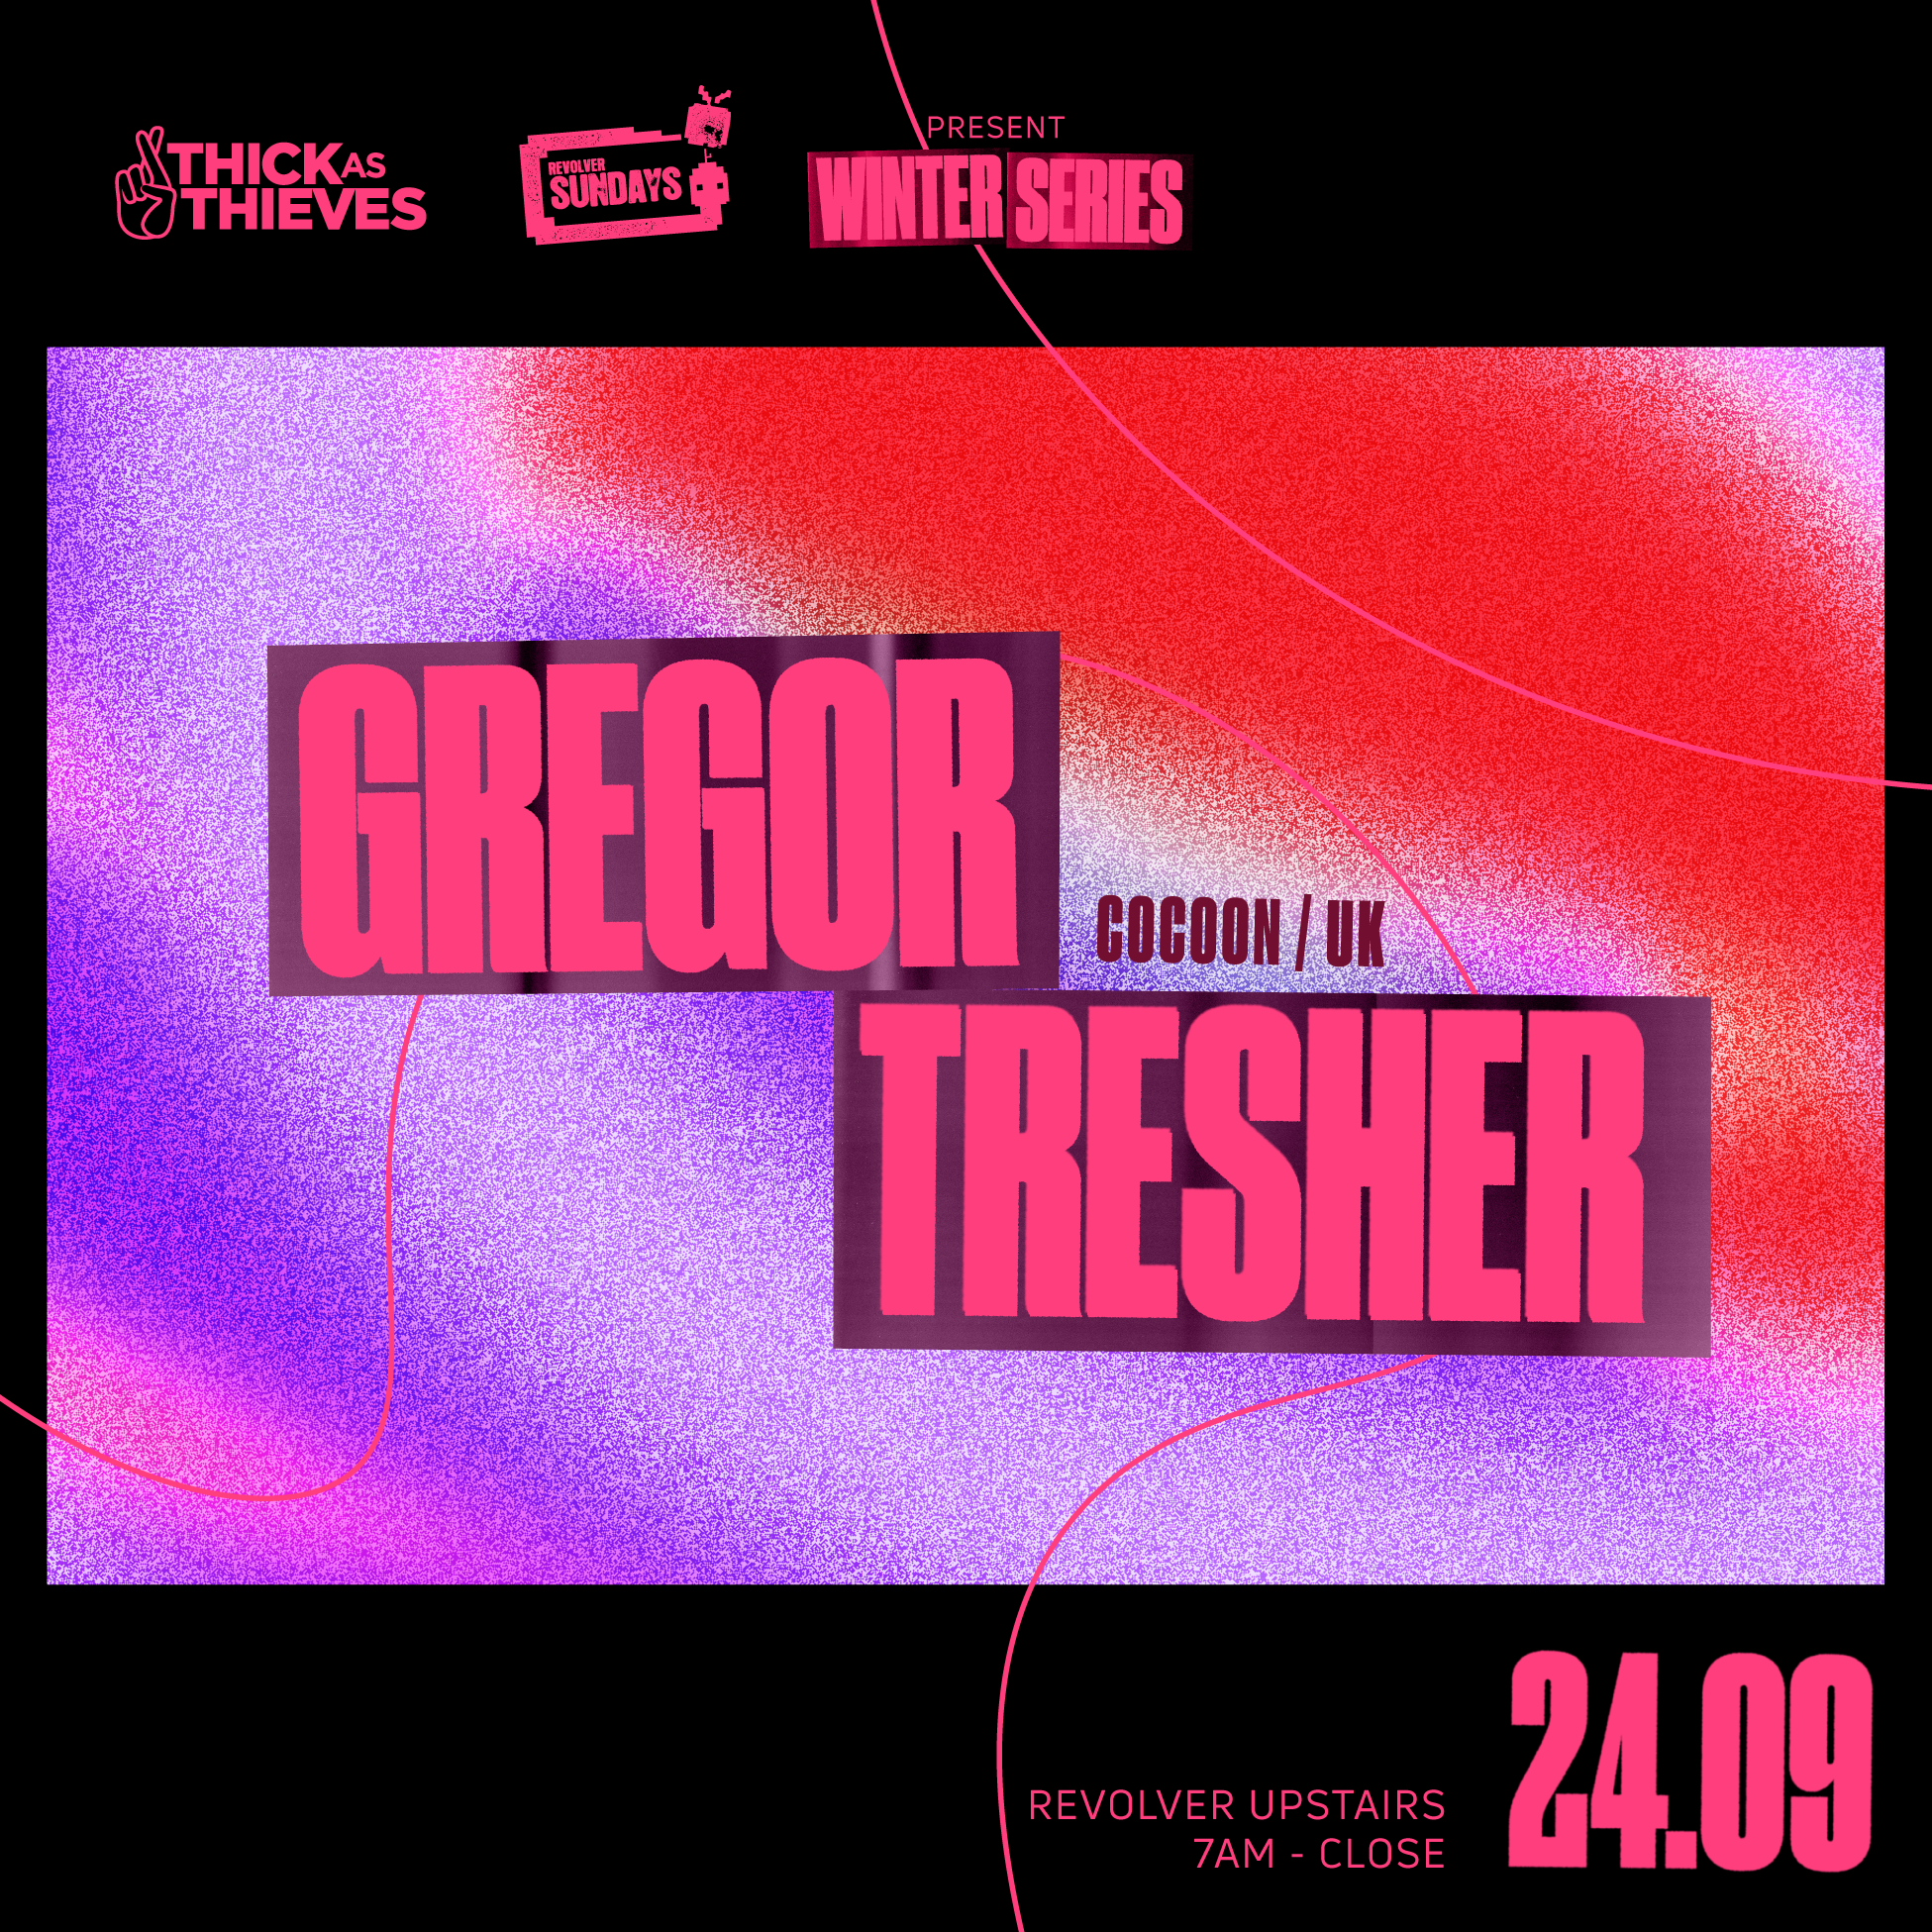 Winter Series feat. Gregor Tresher - フライヤー表